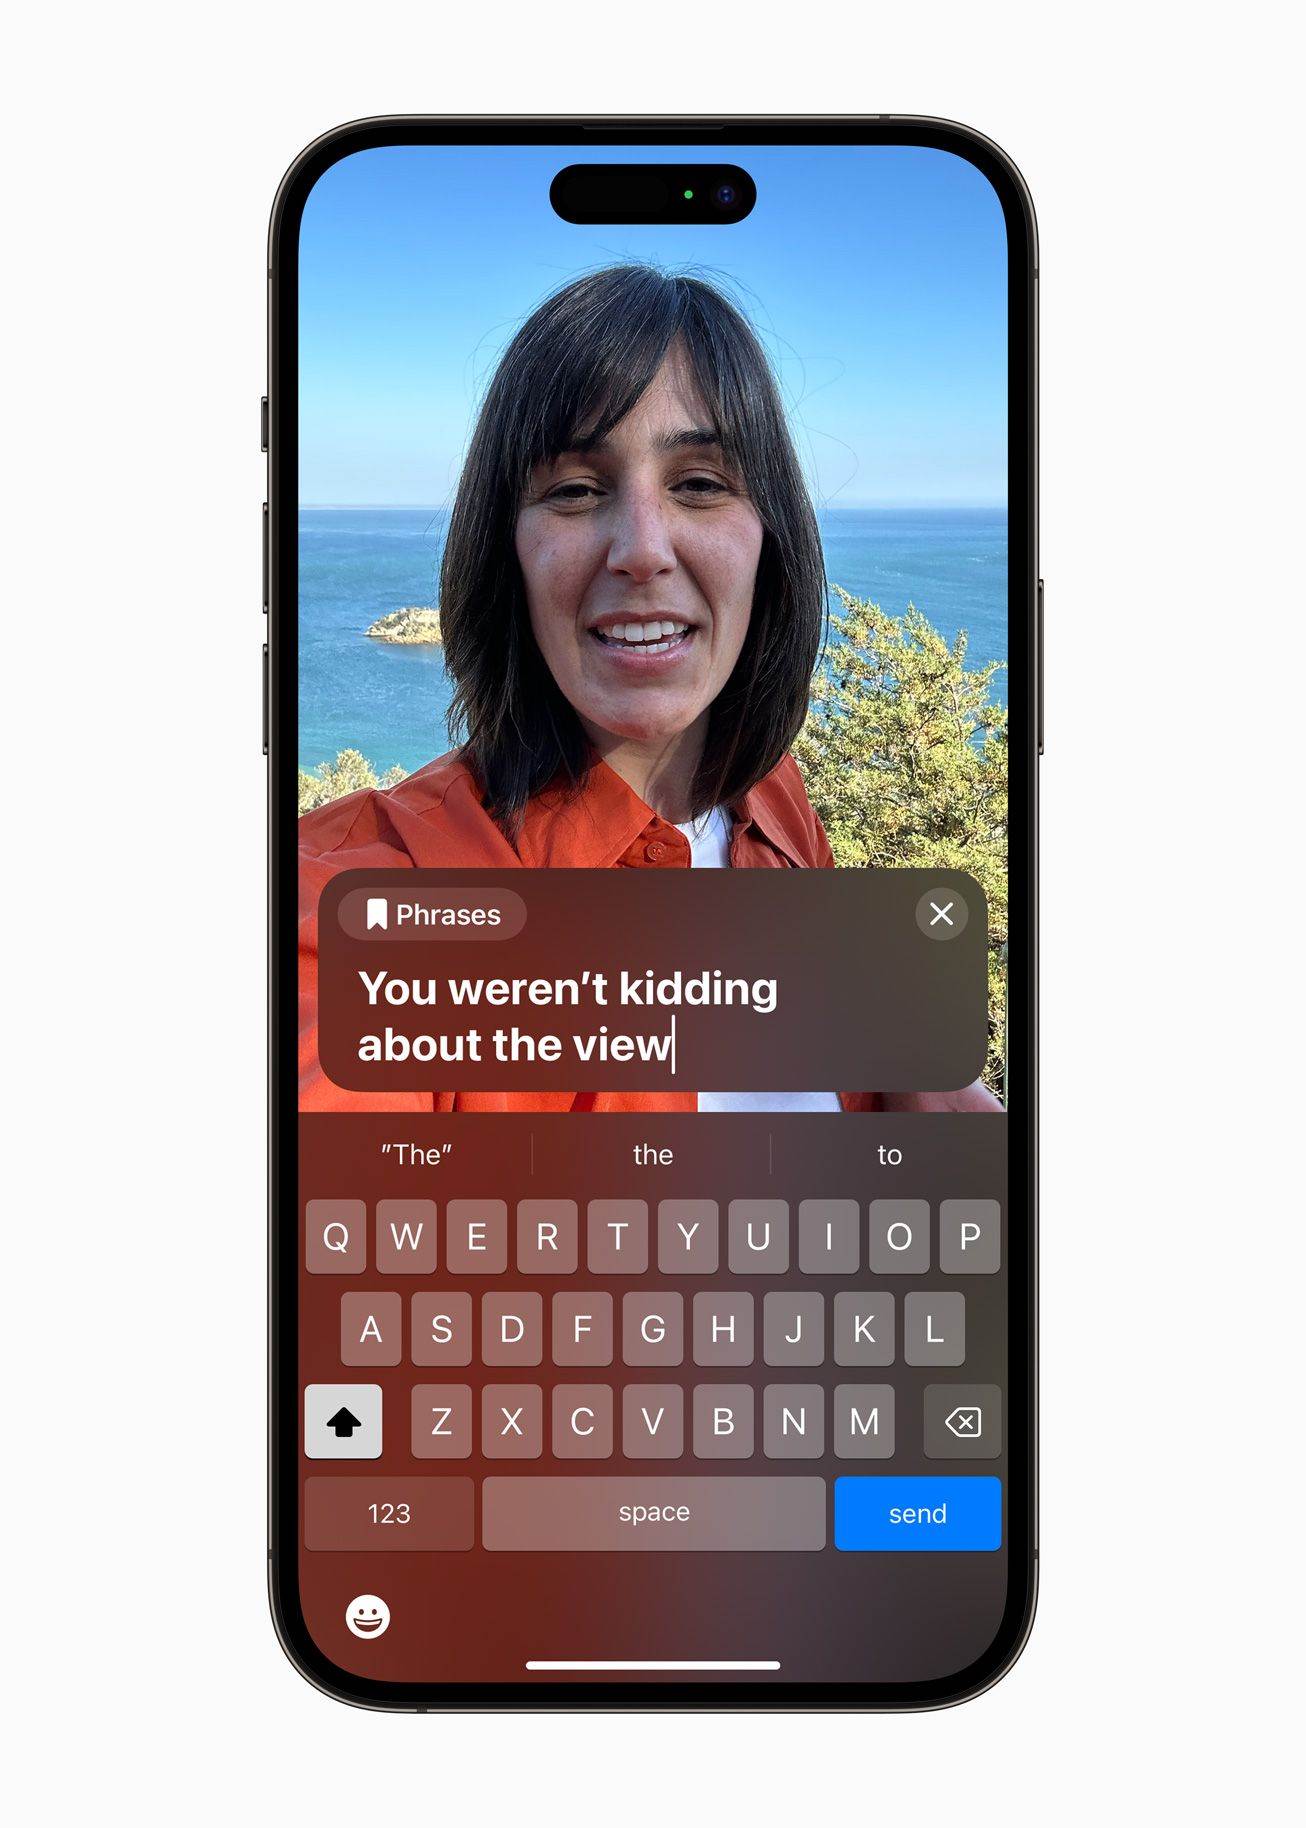  Apple-accessibility-FaceTime-Live-Speech.jpg 